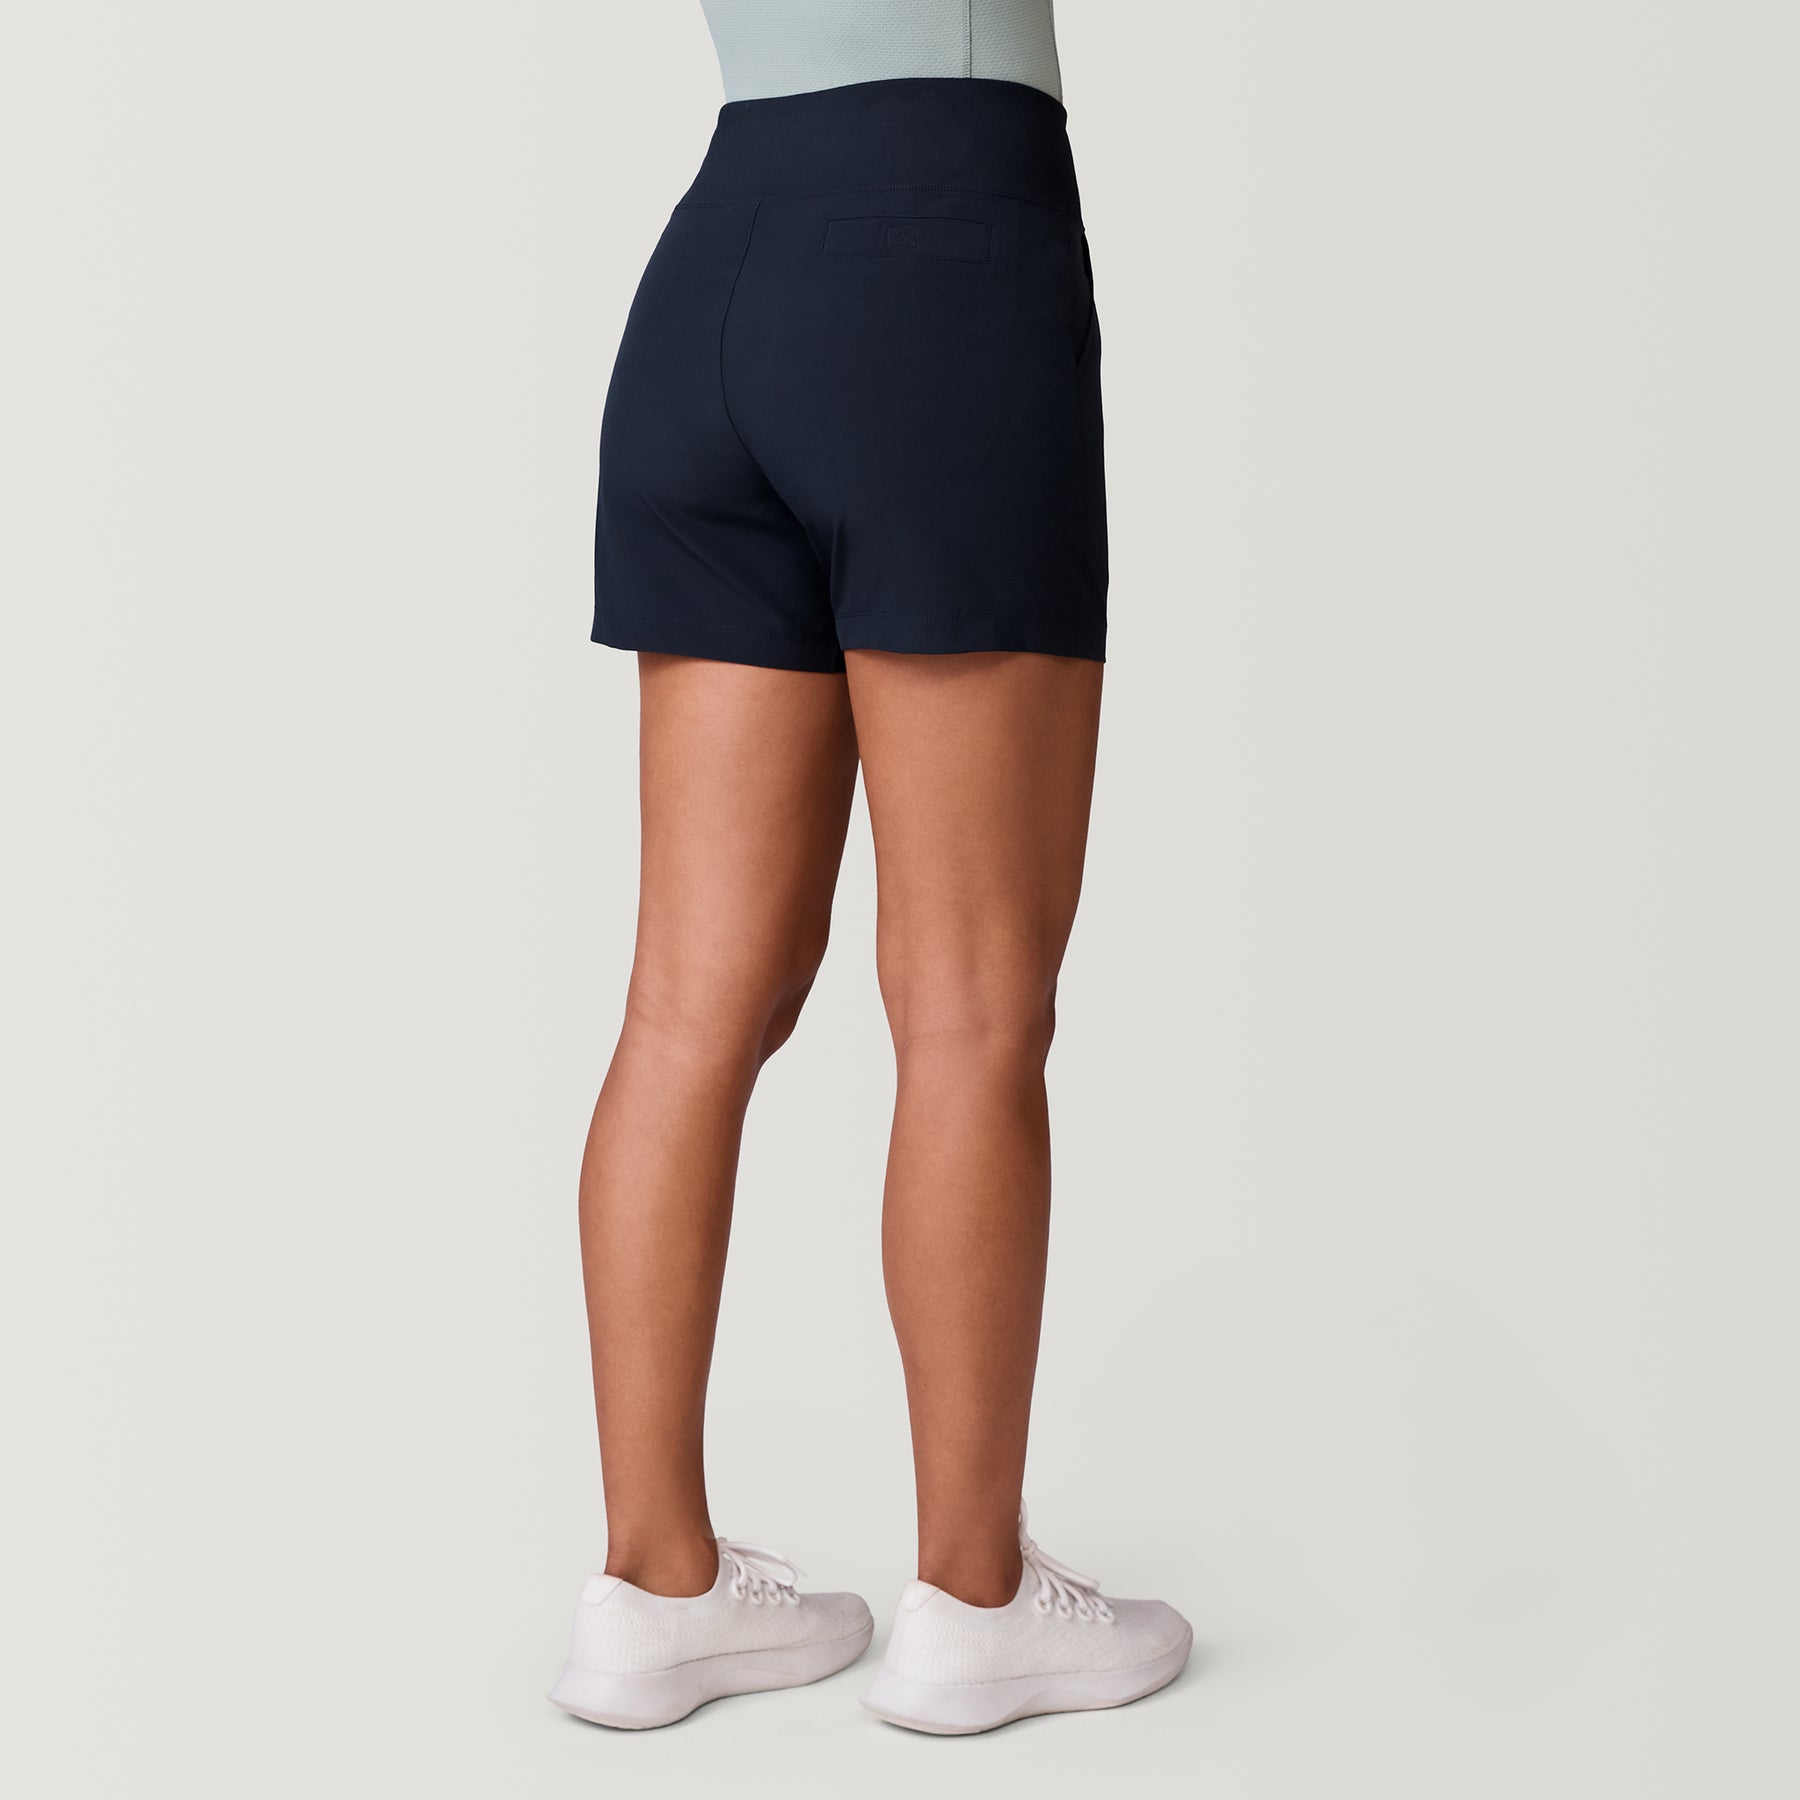 NEW!!! Tuff Athletics Women's Hybrid Shorts Size & Color VARIETY!!!